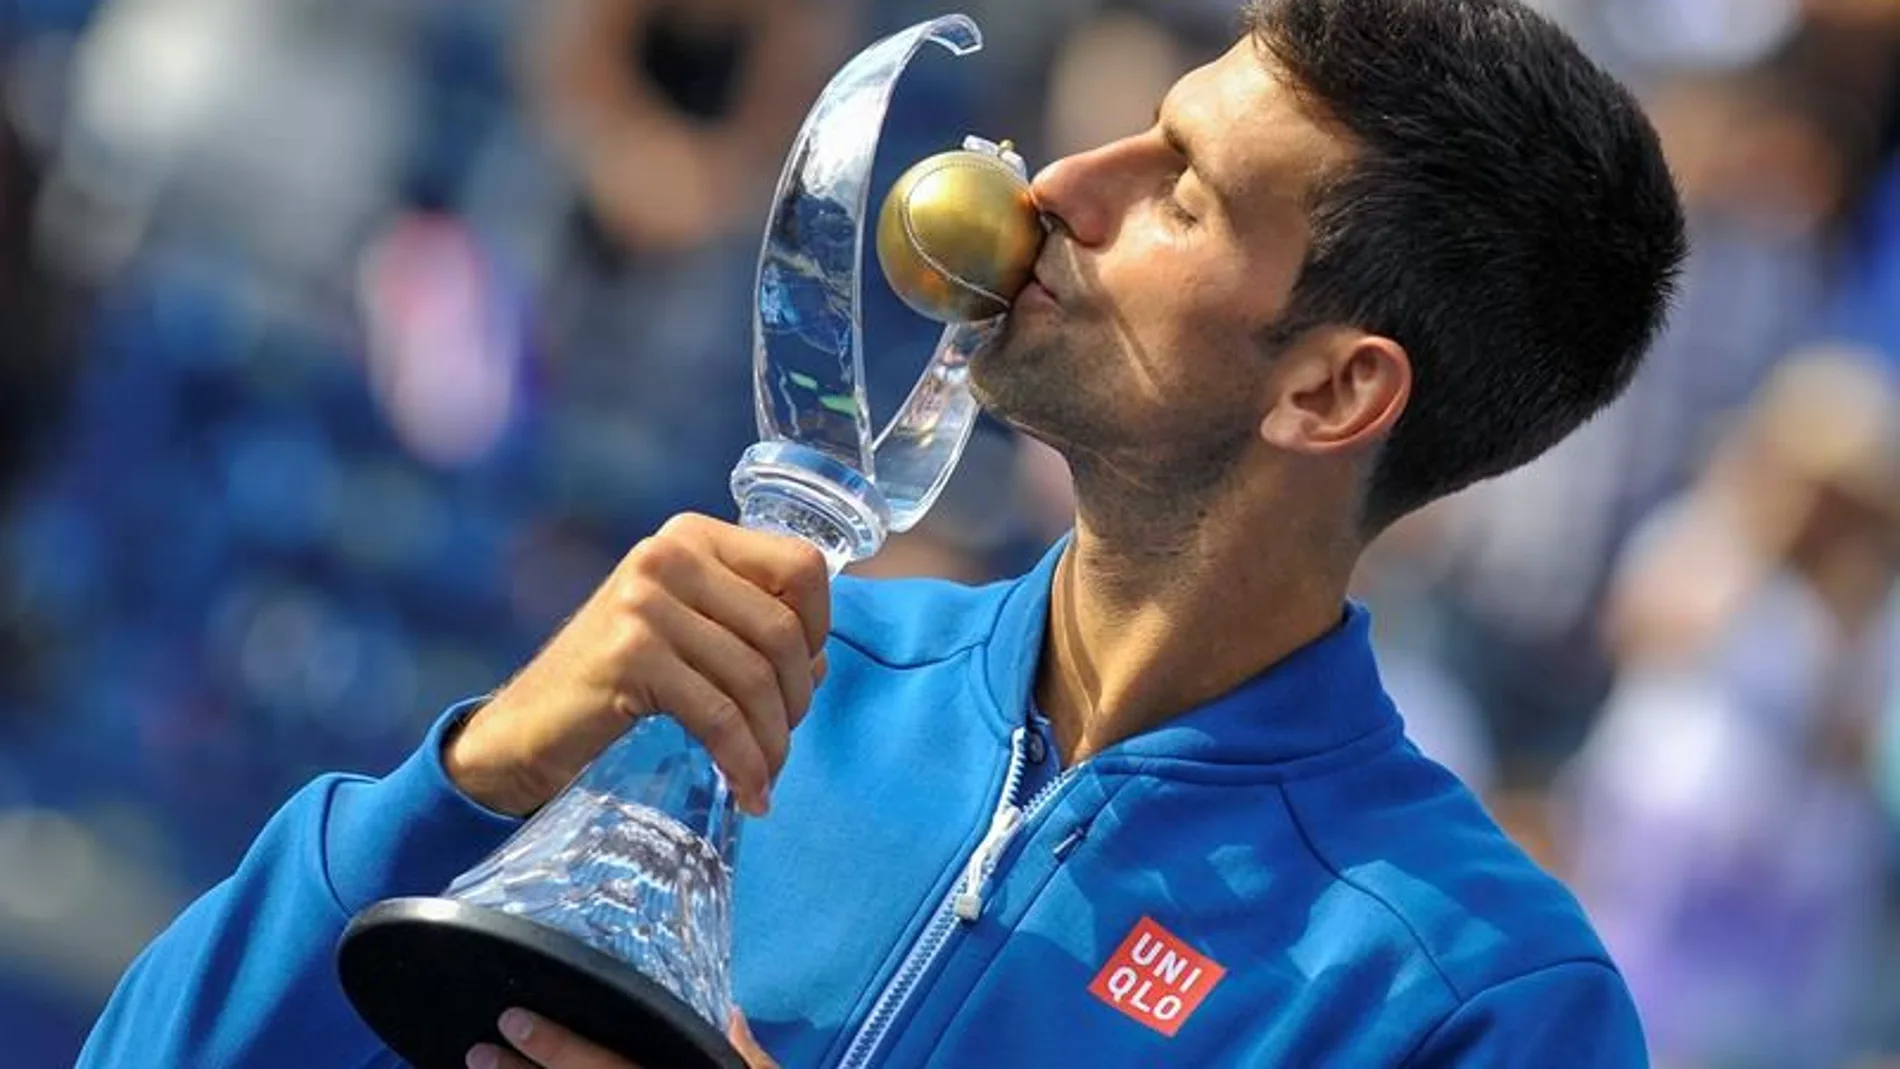 Novak Djokovic besa el trofeo del torneo de Toronto